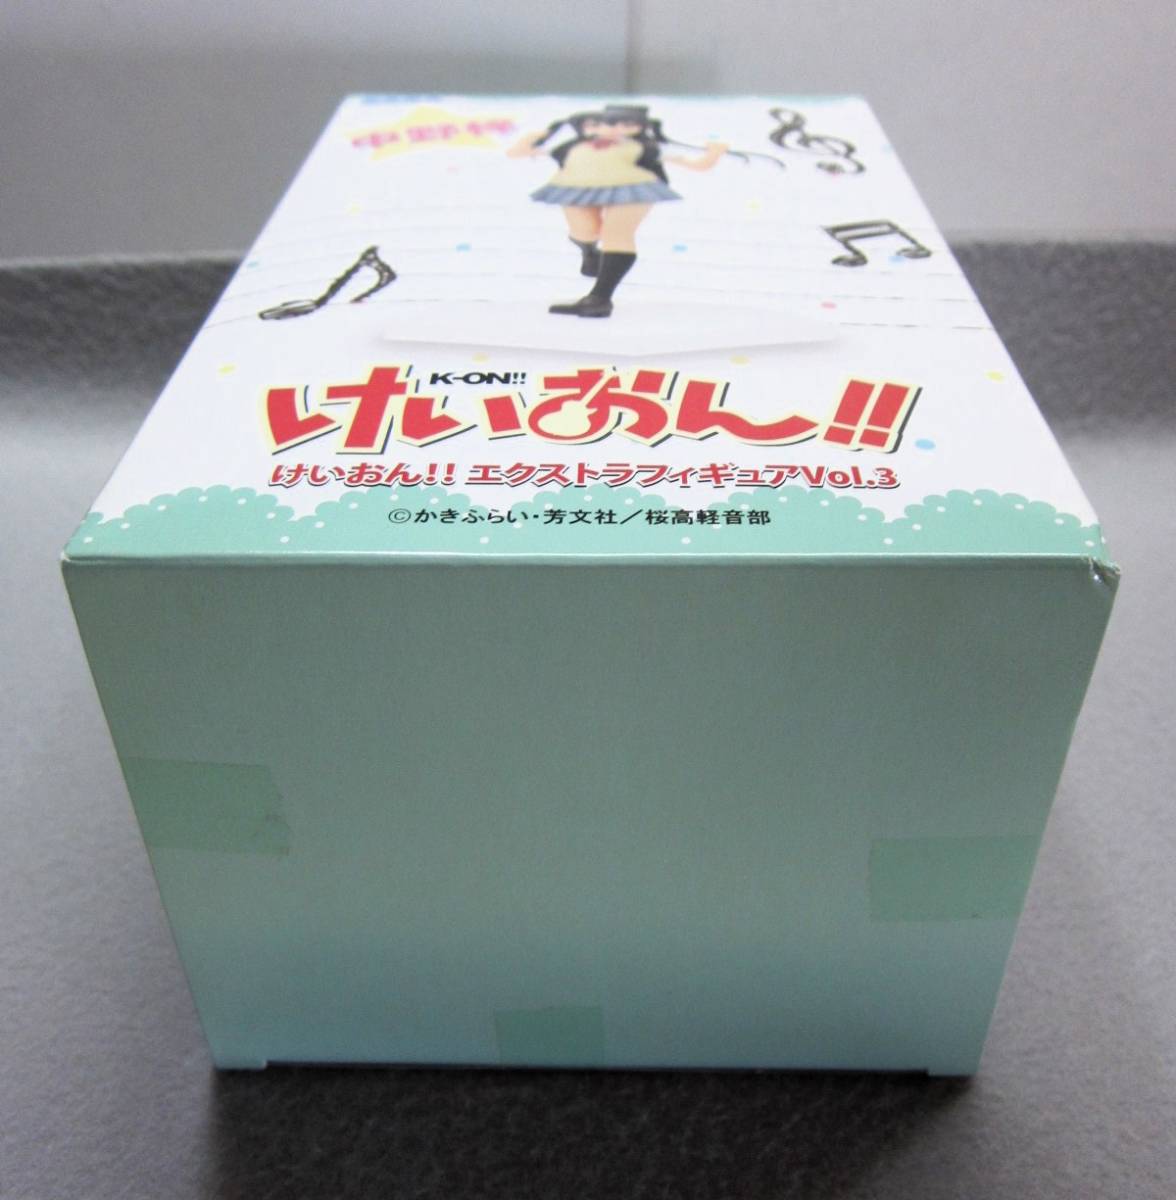  Sega * K-On!! extra figure Vol.3* Nakano Azusa ... ...( uniform )*K-ON!!*SEGA2011